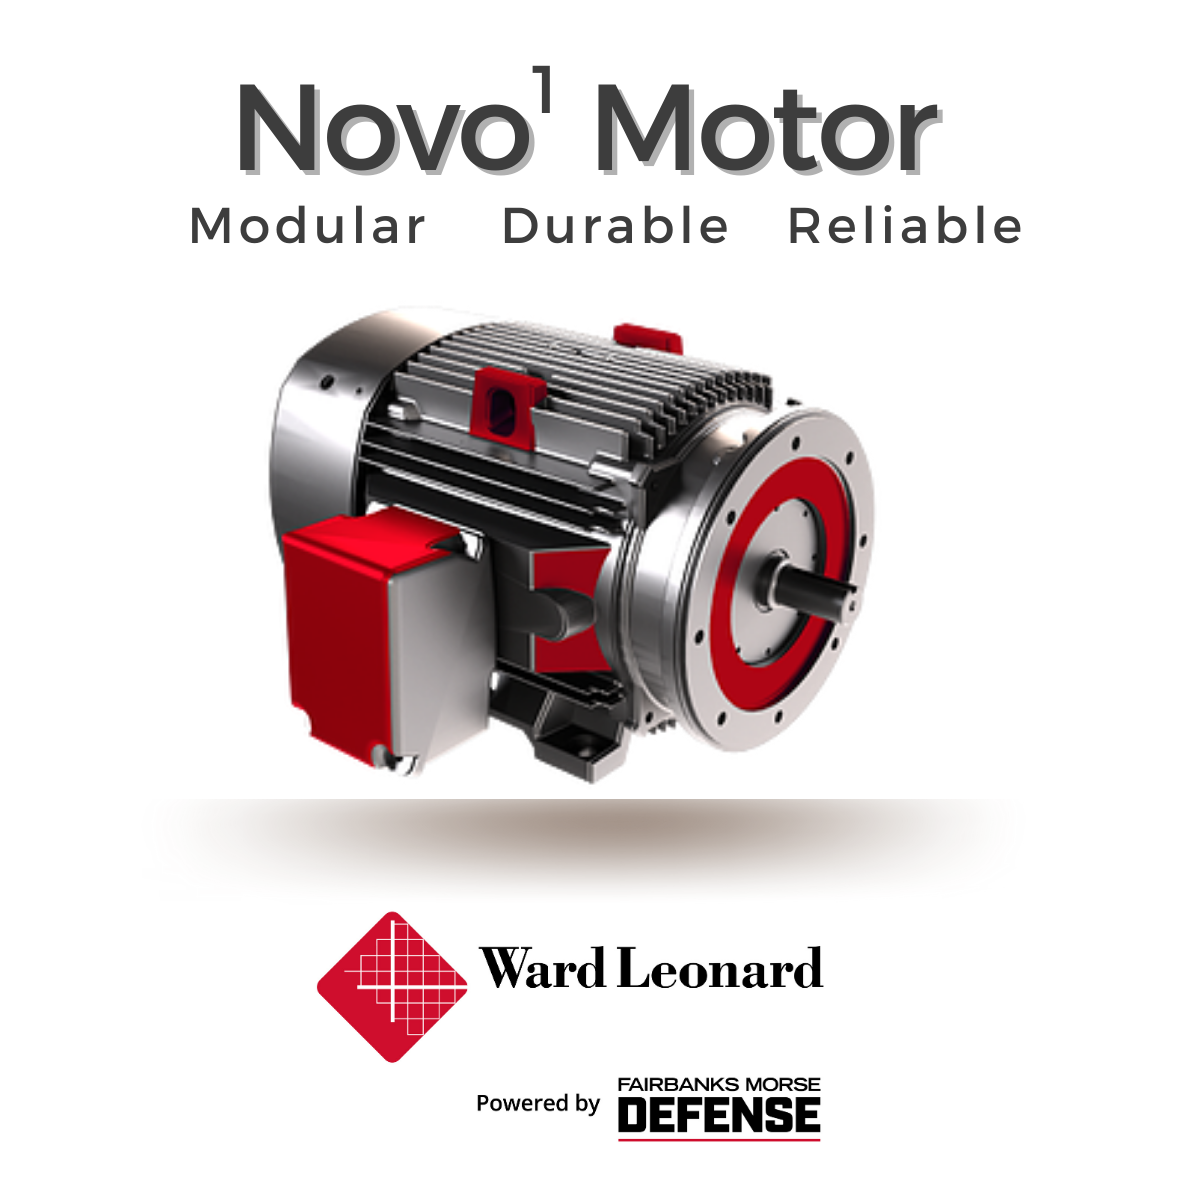 Ward Leonard, a Fairbanks Morse Defense Company, Introduces the Modular Novo1 Motor Line